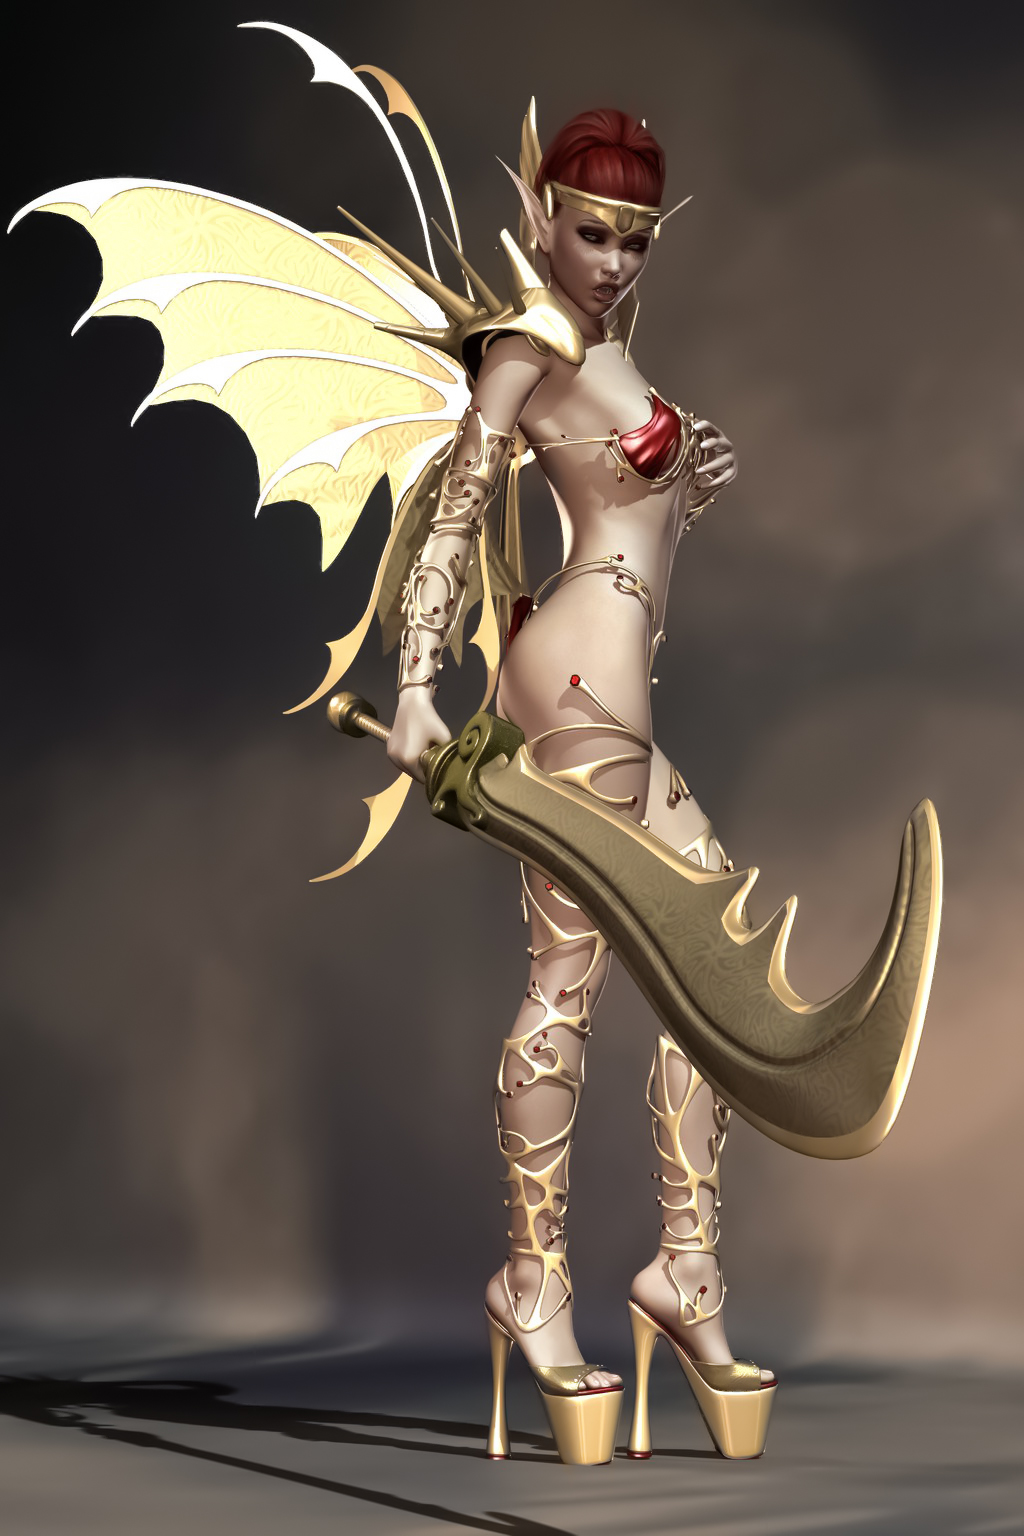 General 1024x1536 Evinessa CGI women redhead warrior tiaras wings skimpy clothes high heels platform high heels gold weapon sword shadow